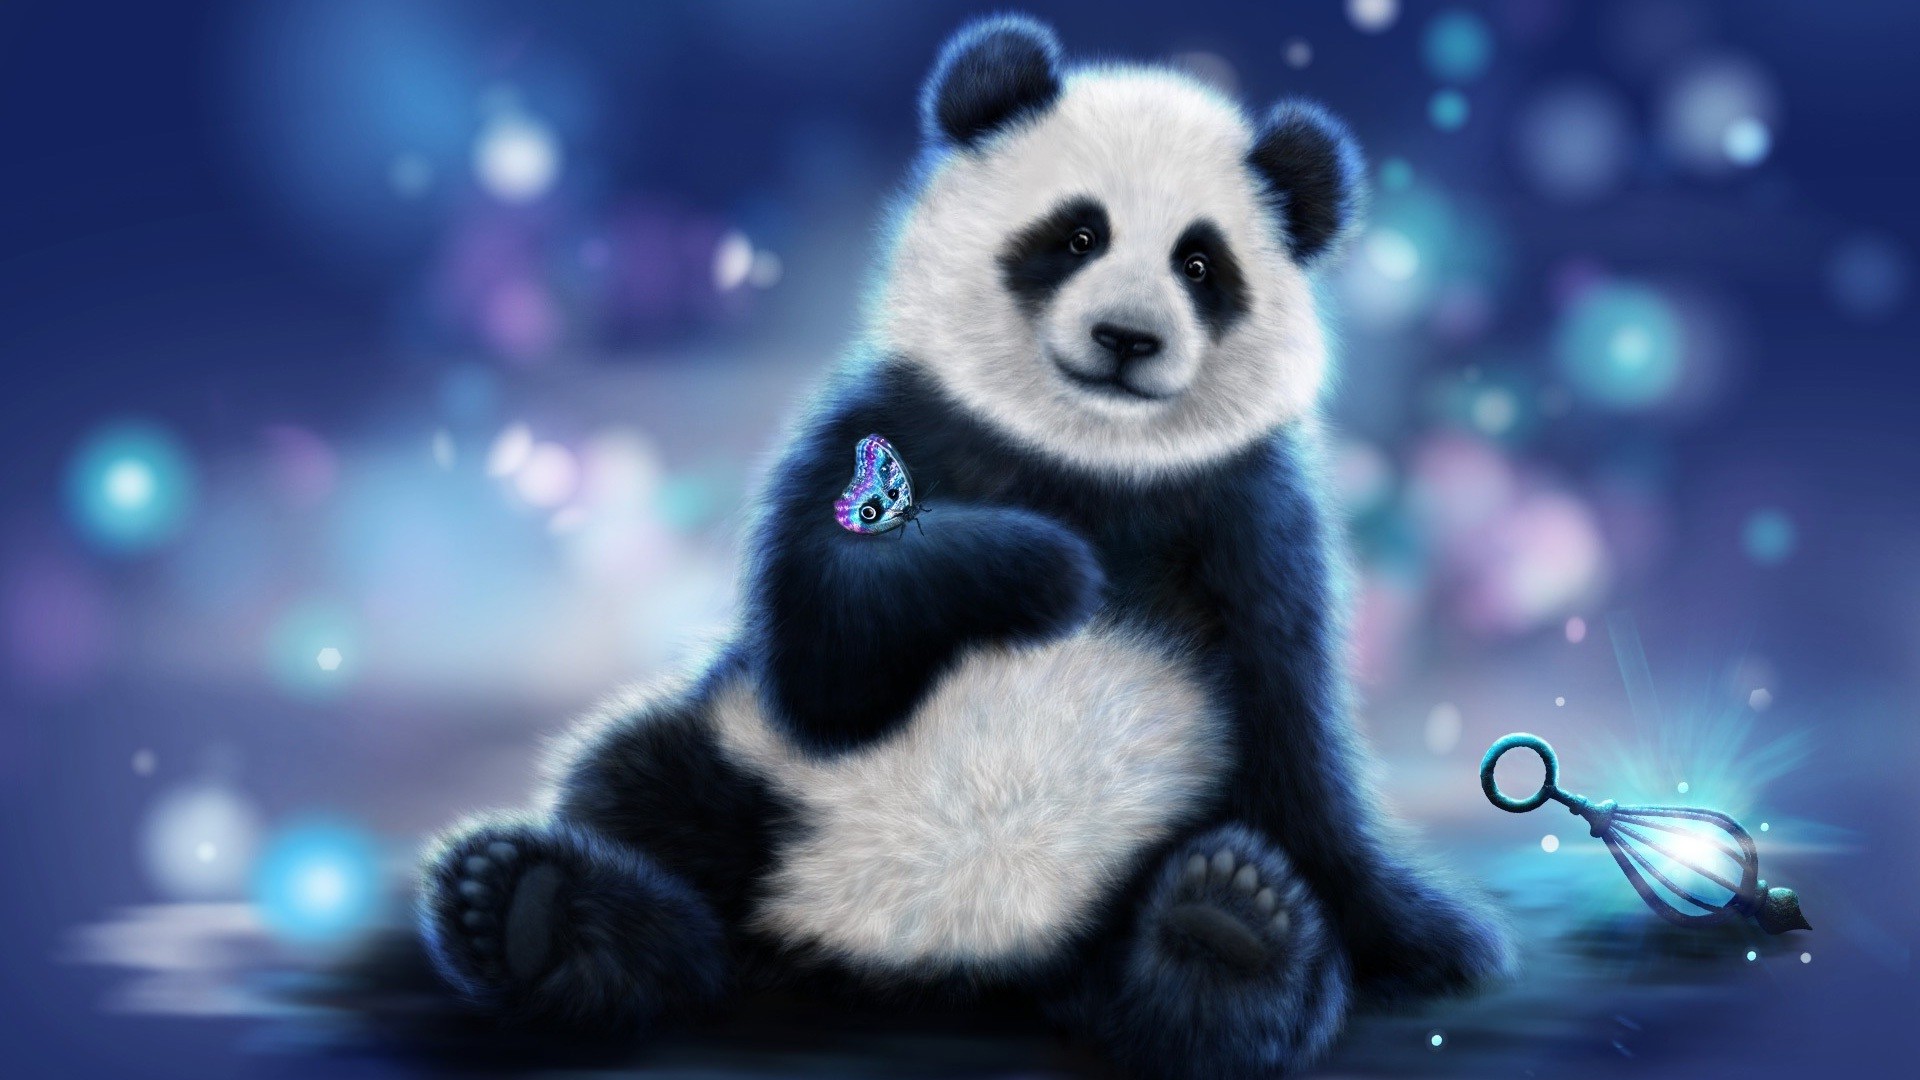 1920x1080 Cute Panda Images HD Tumblr Free